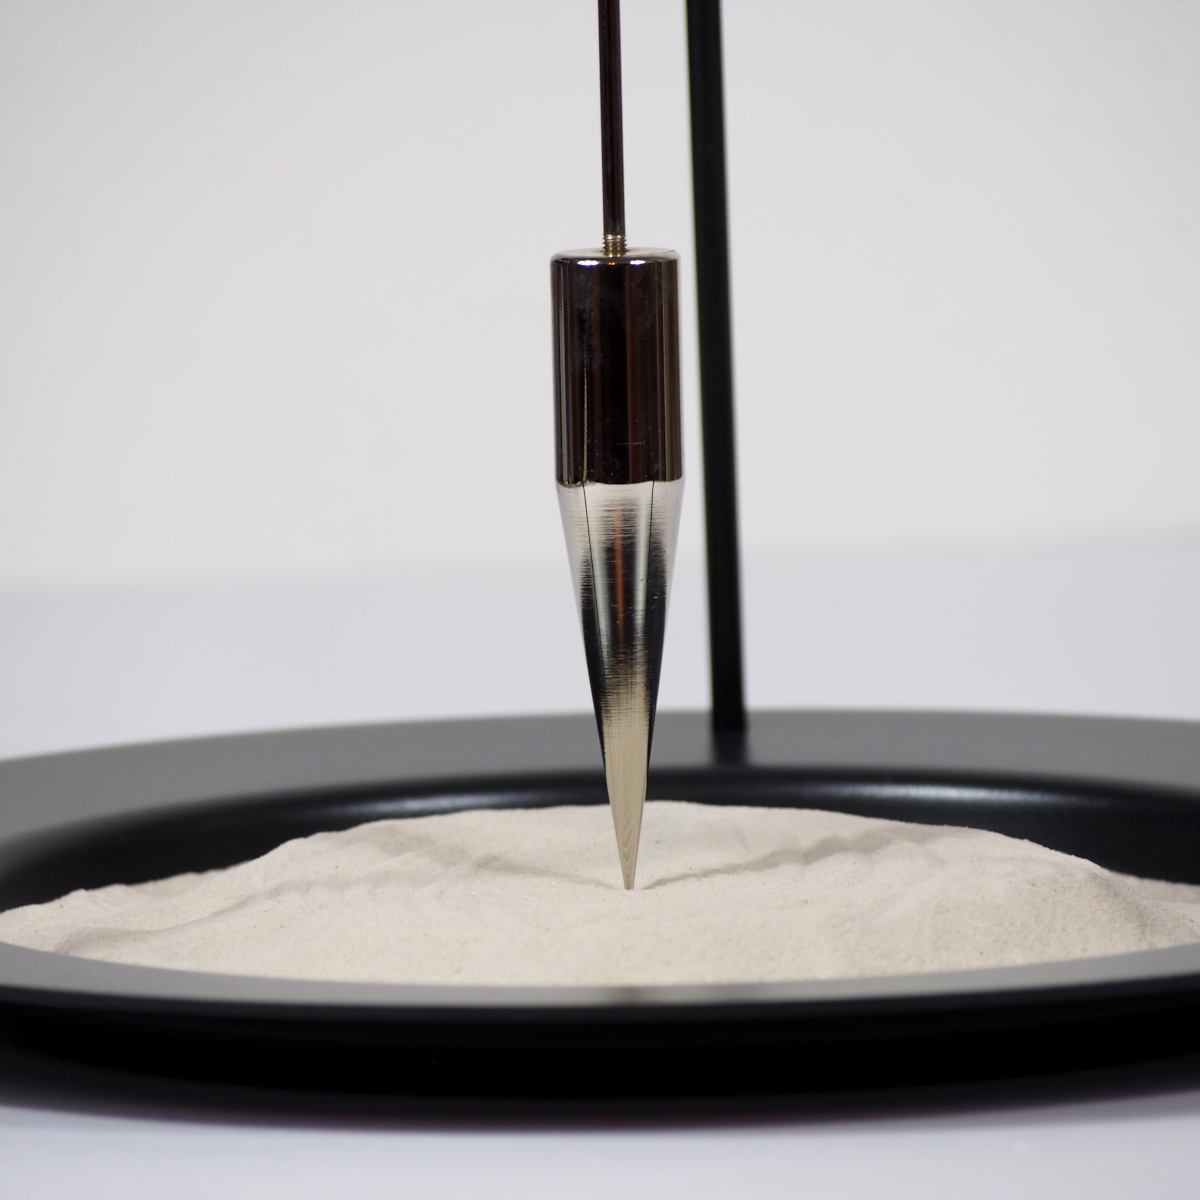 Standing Sand Pendulum made of Stainless Steel (Height 55 cm